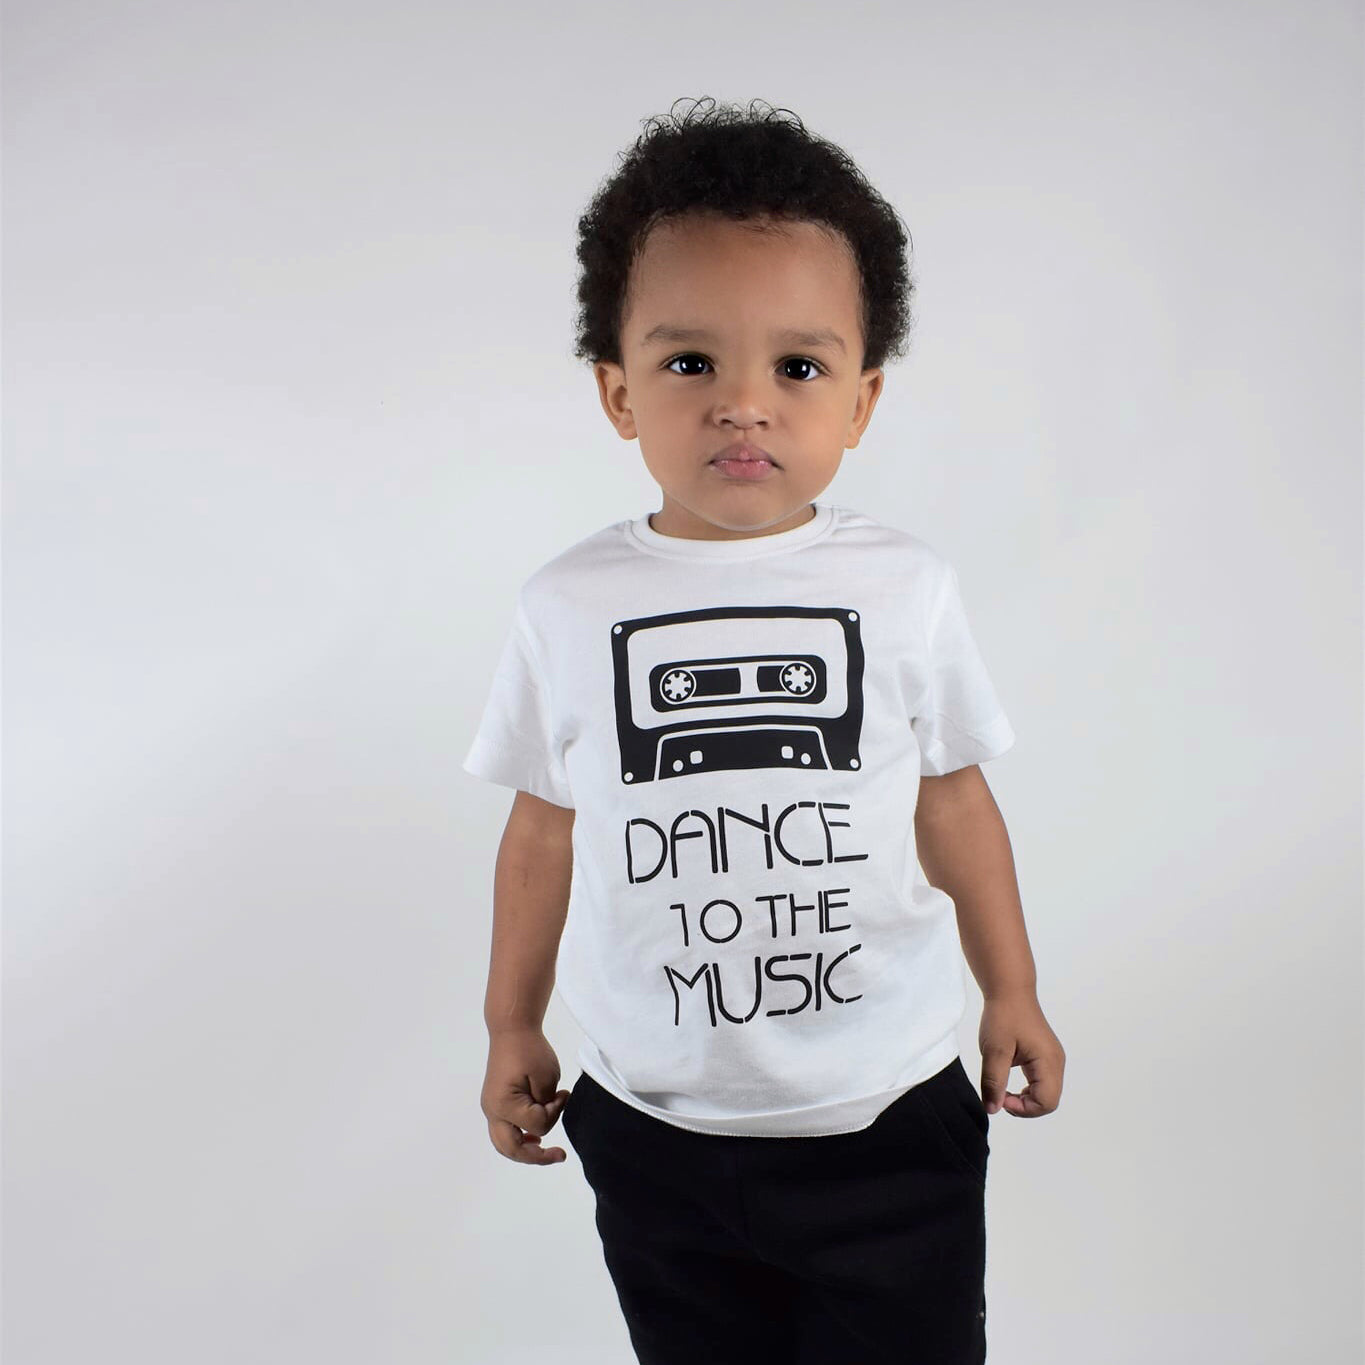 'Dance to the music' kids shortsleeve shirt